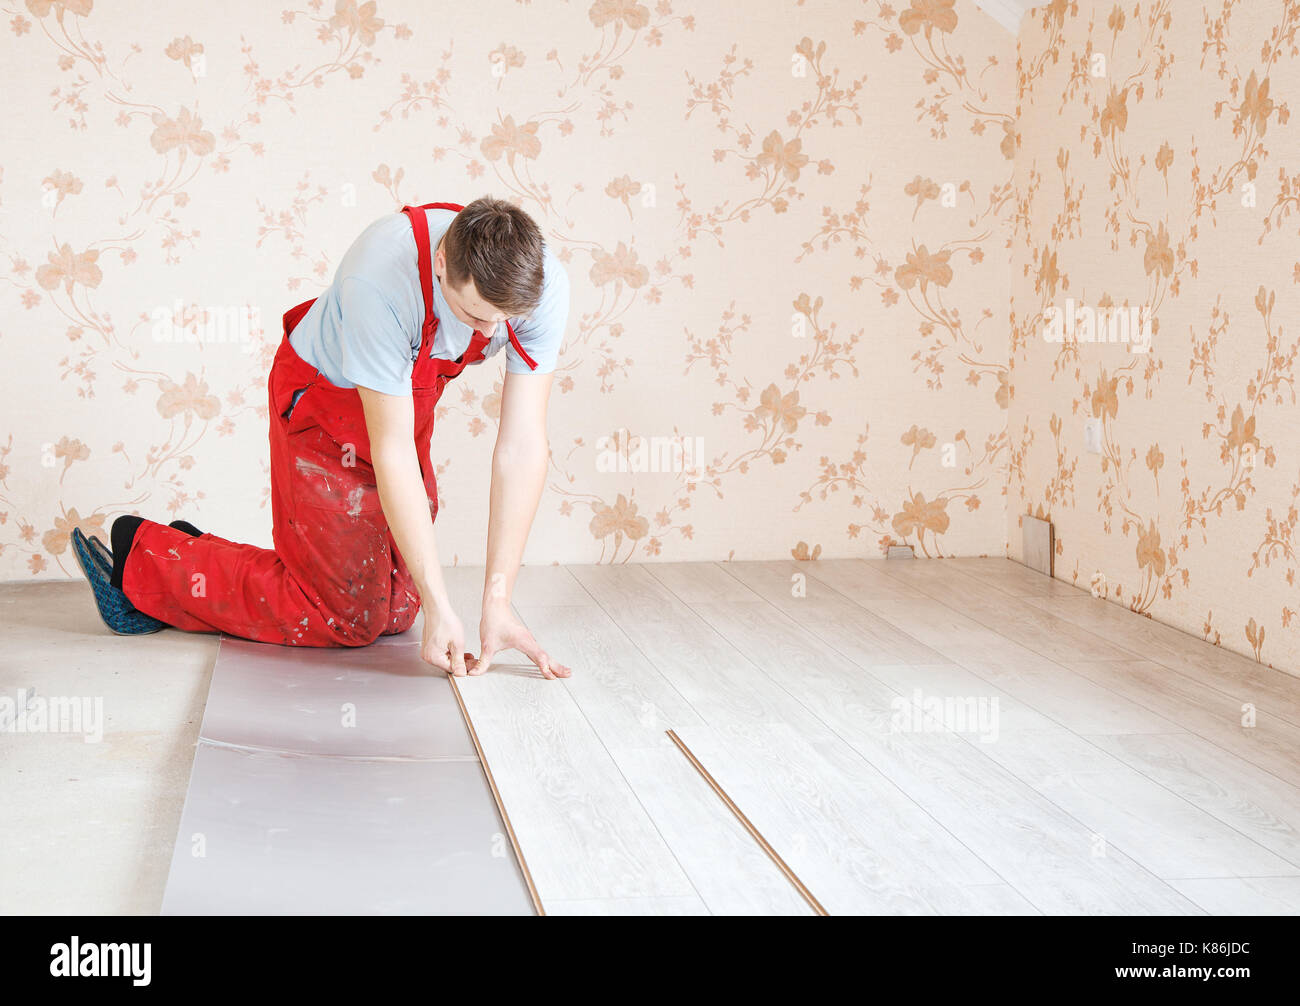 Handyman Laying Down Laminate Flooring Boards While Renovating A